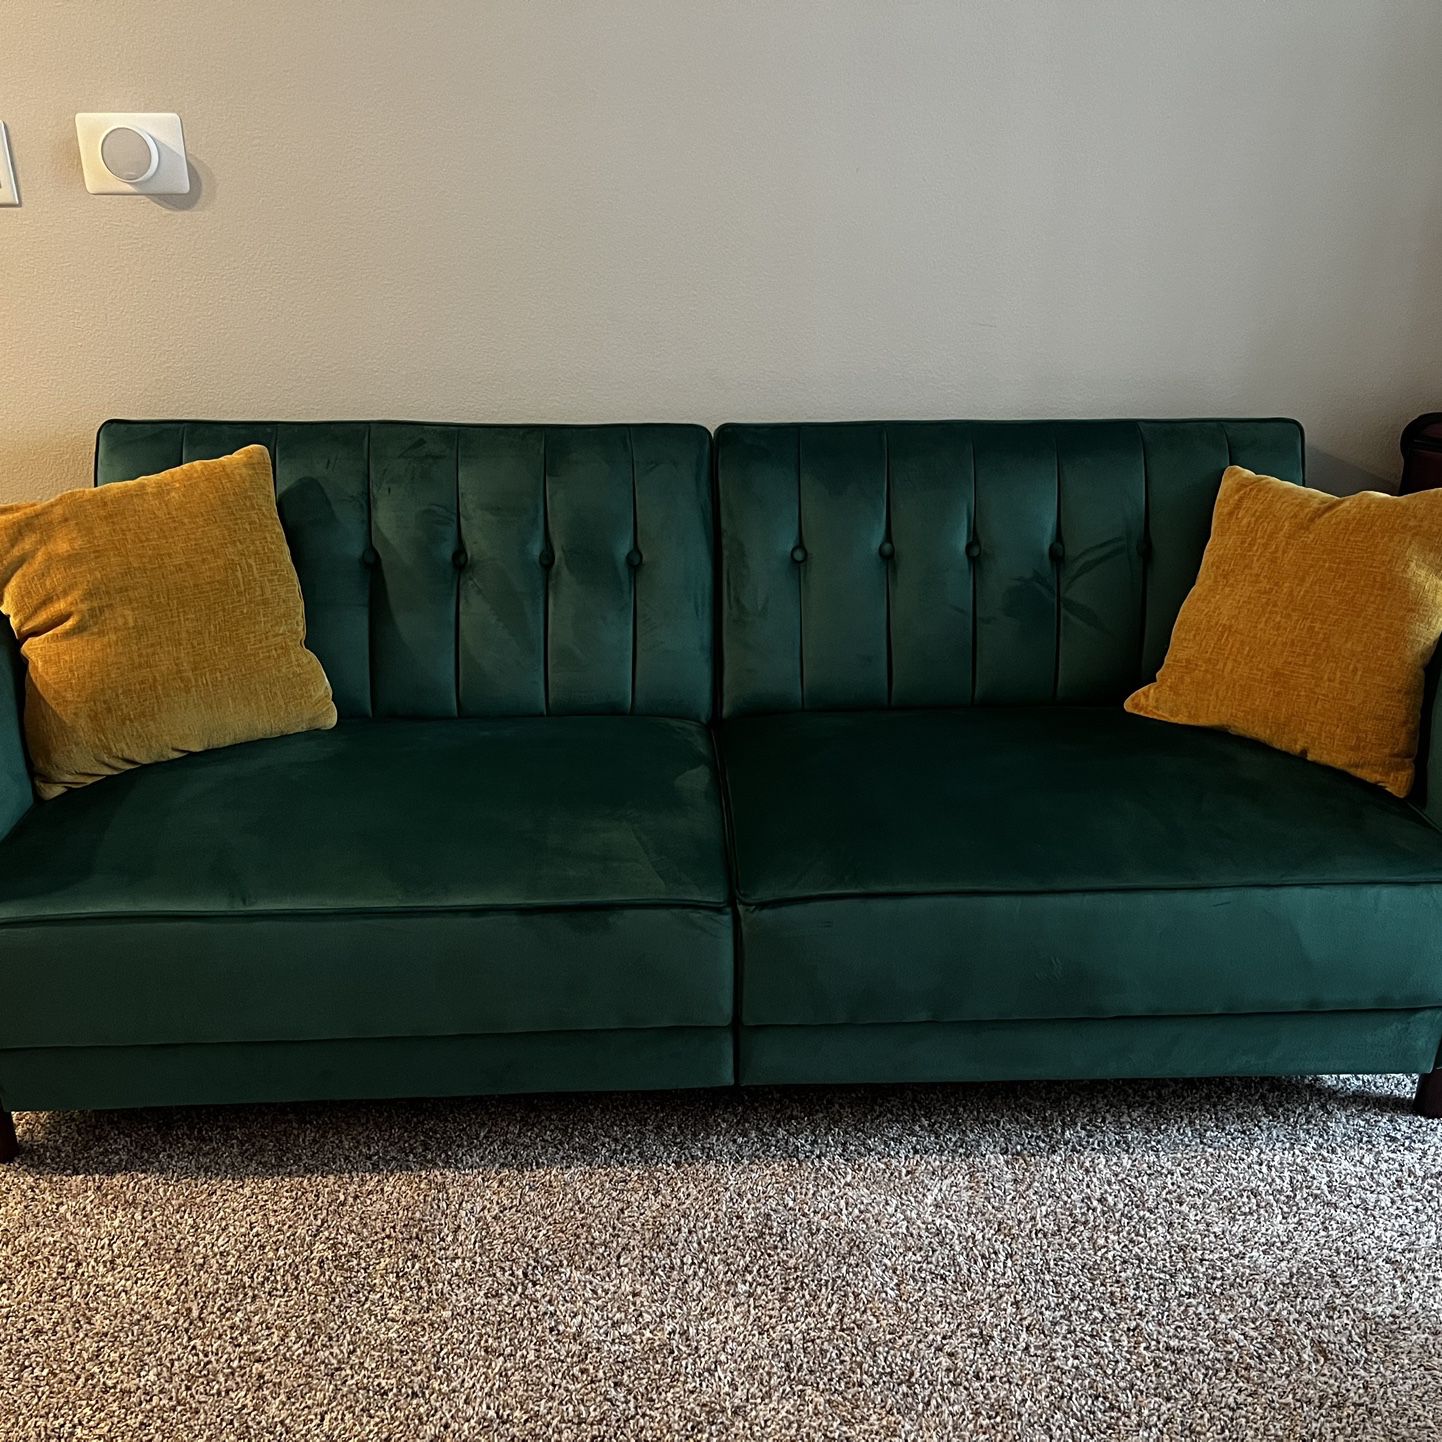 Brand new Futon Sofa